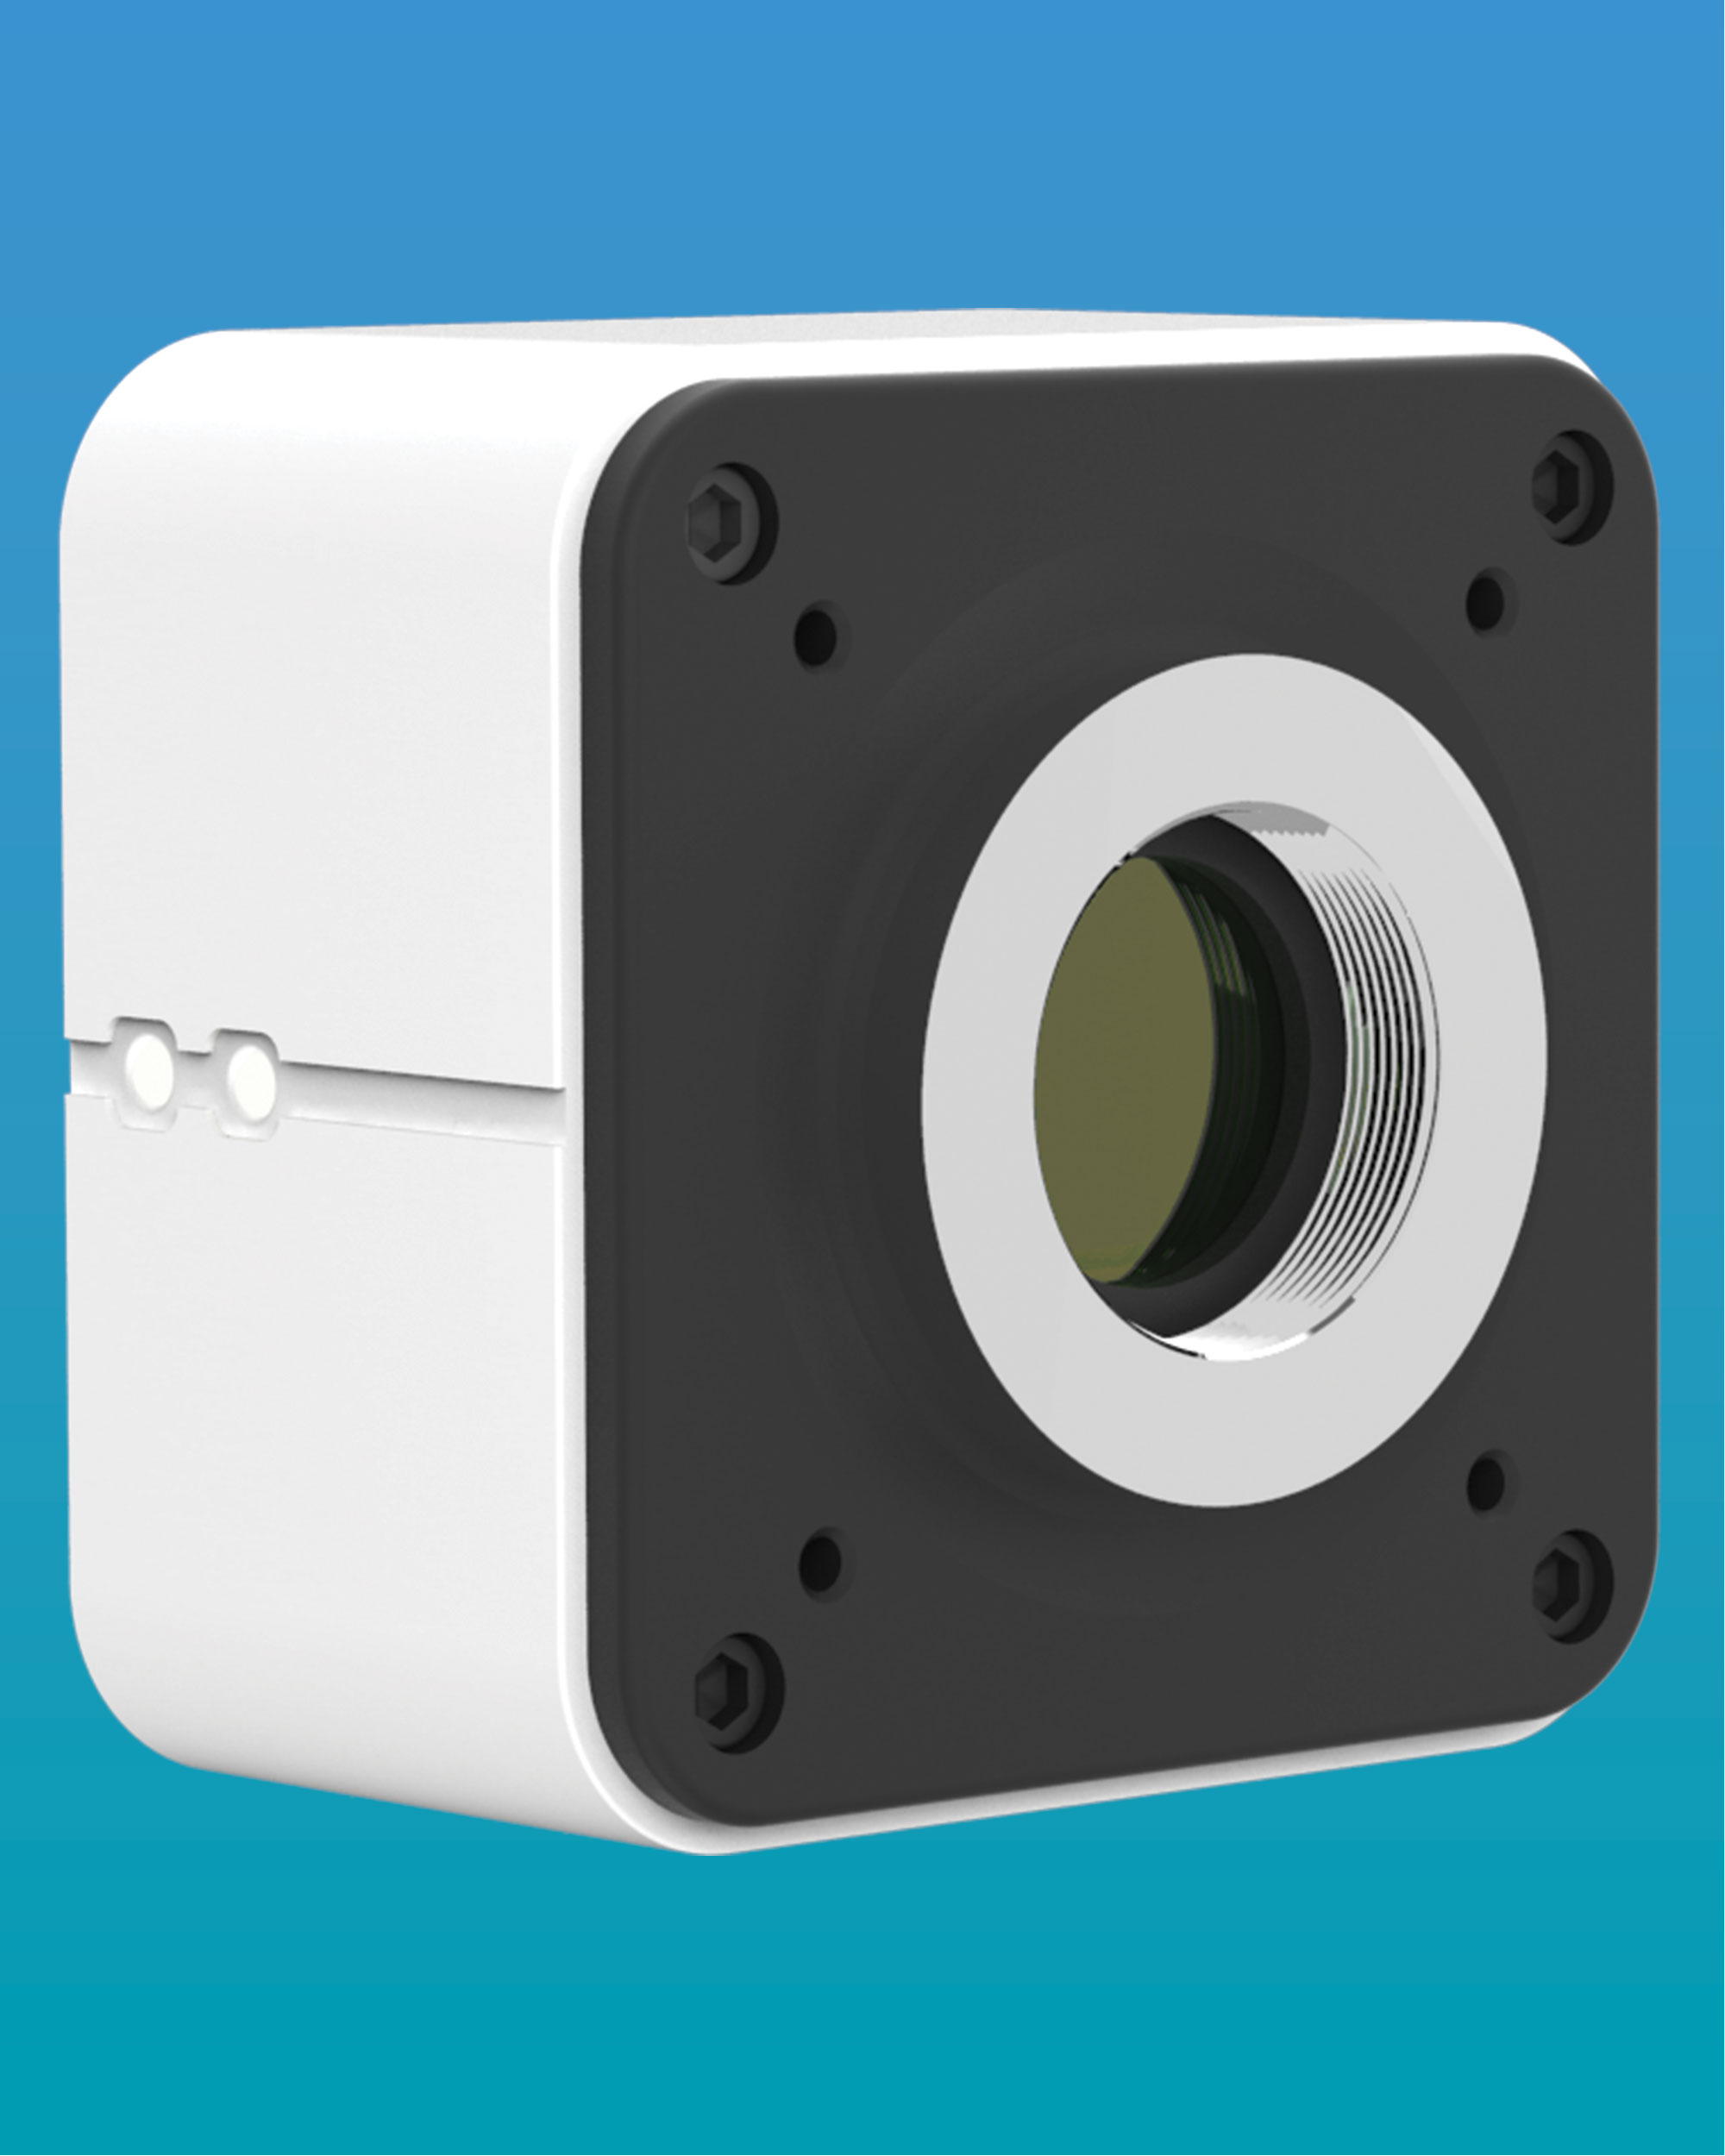  LC-33 20.0 MP USB3.0 Digital Camera for Fluorescence, Biological, Polarizing, Metallographic and Stereoscopic Microscope 